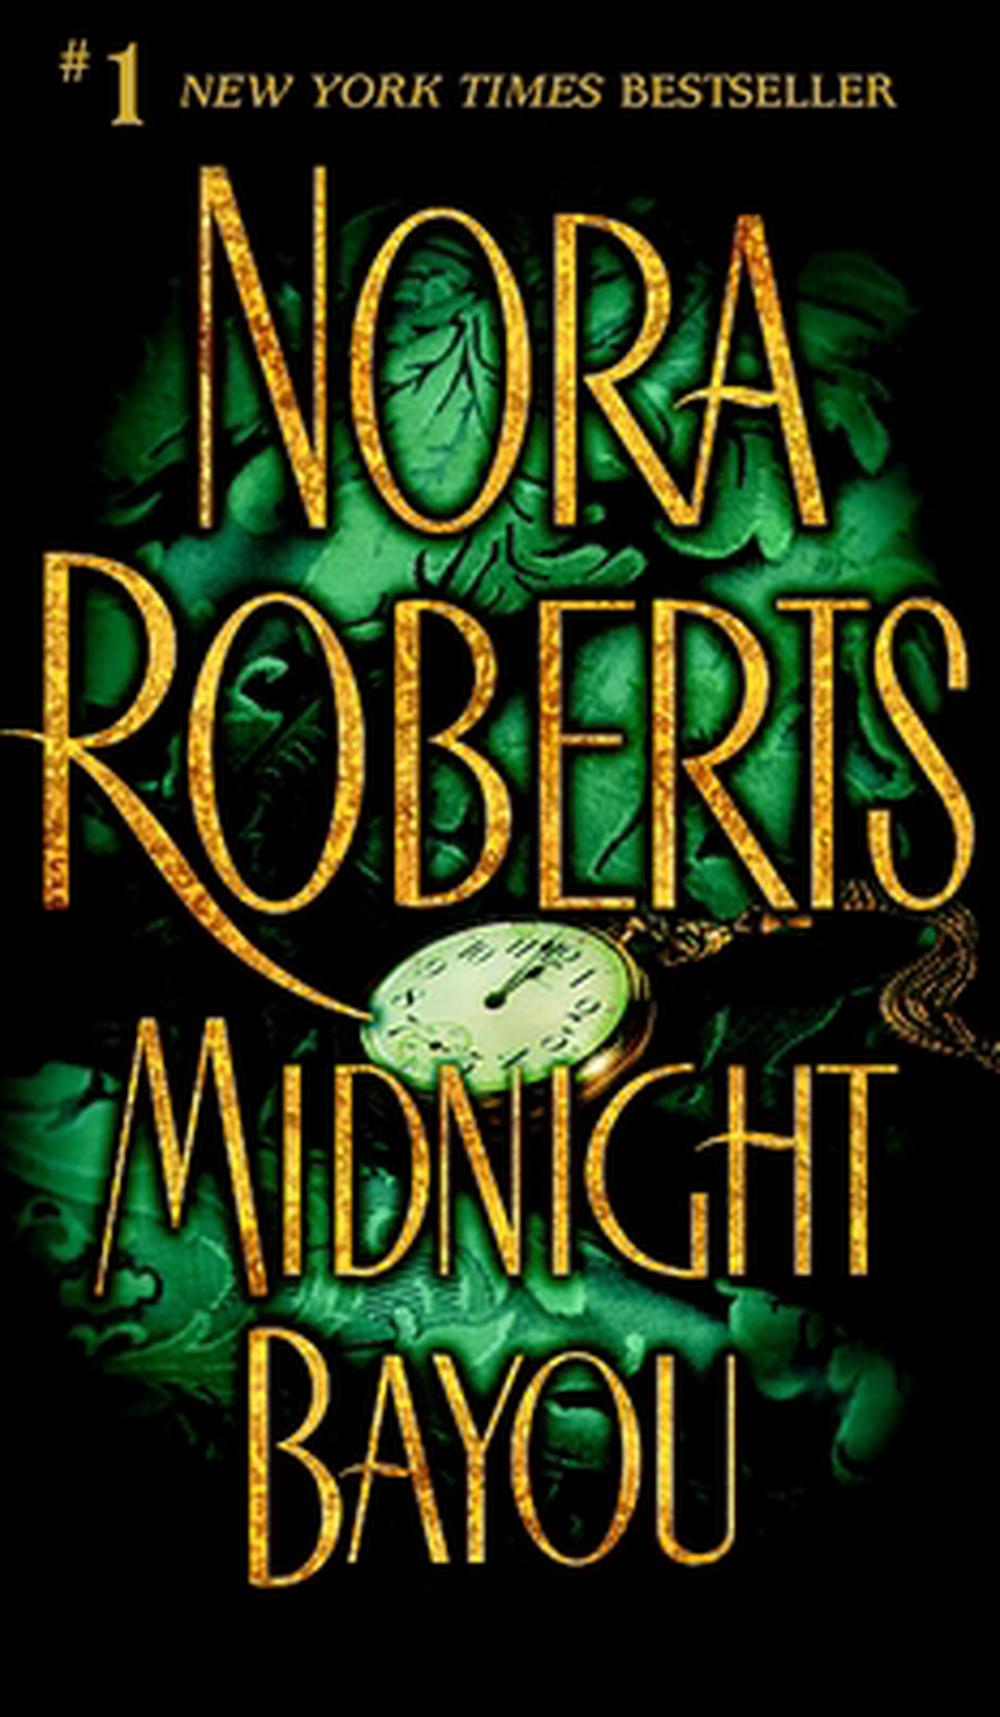 nora roberts book midnight bayou